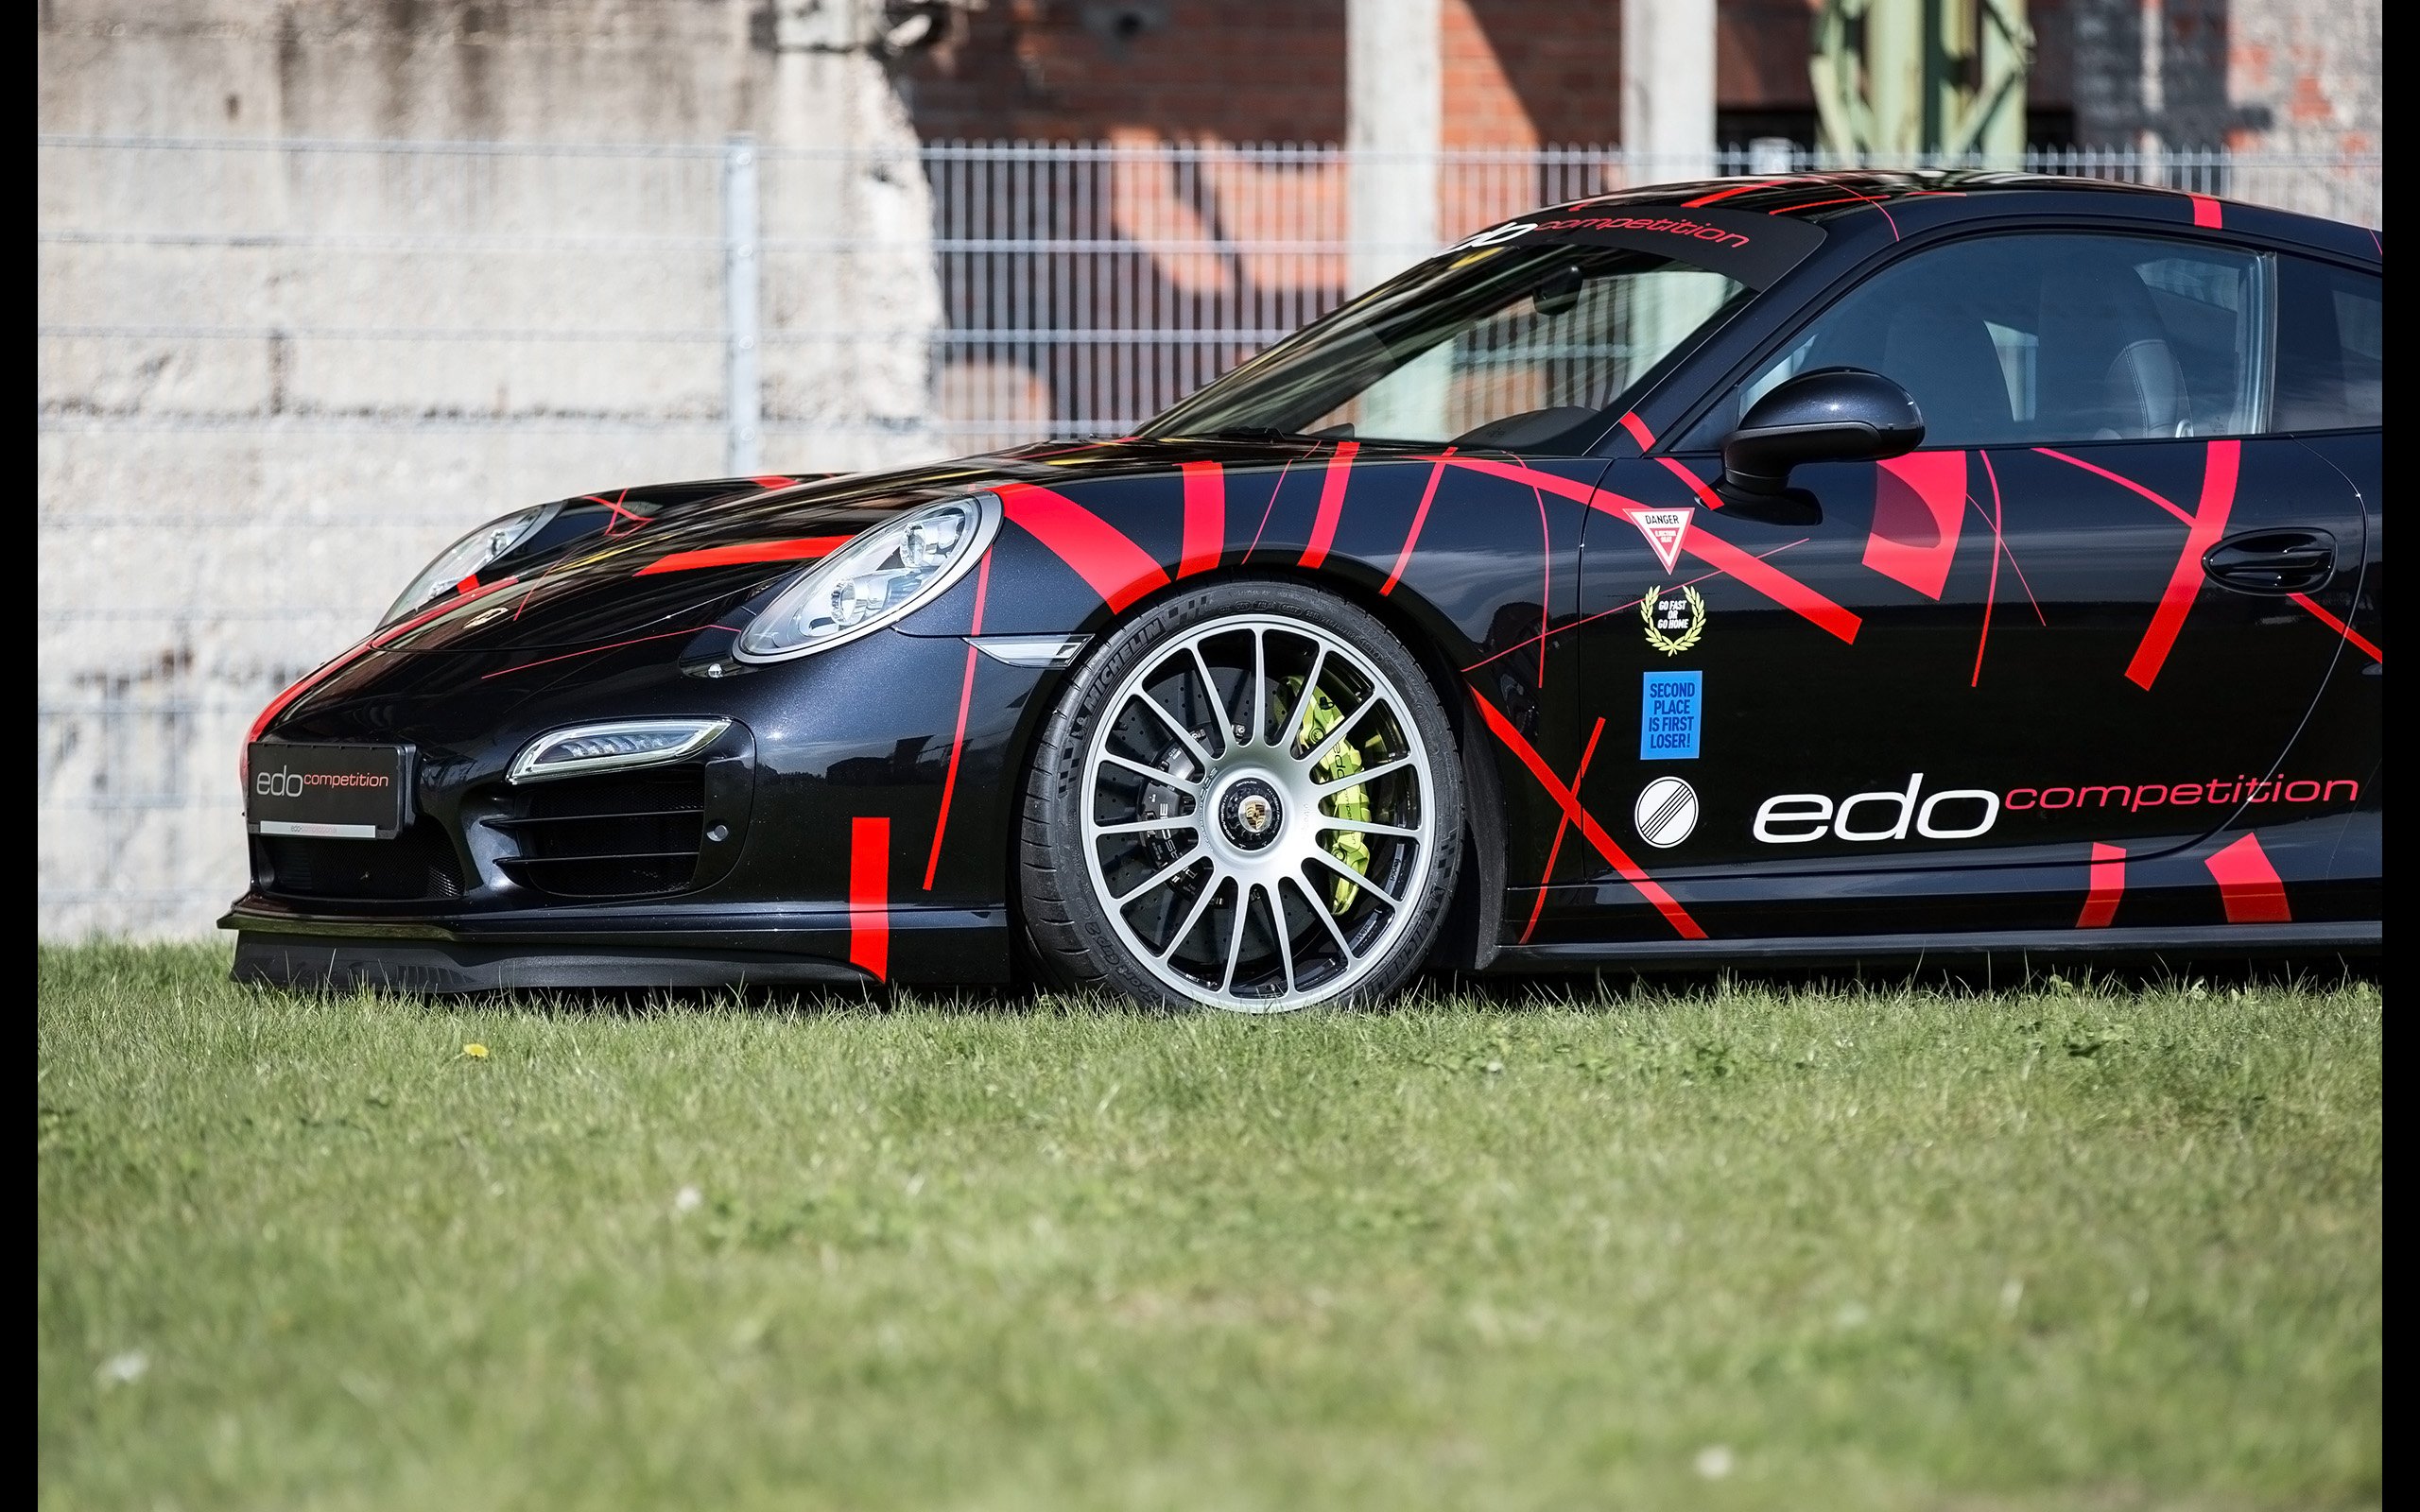 2014, Edo competition, Porsche, 991, Turbo, S, Tuning, 911, Wheel Wallpaper